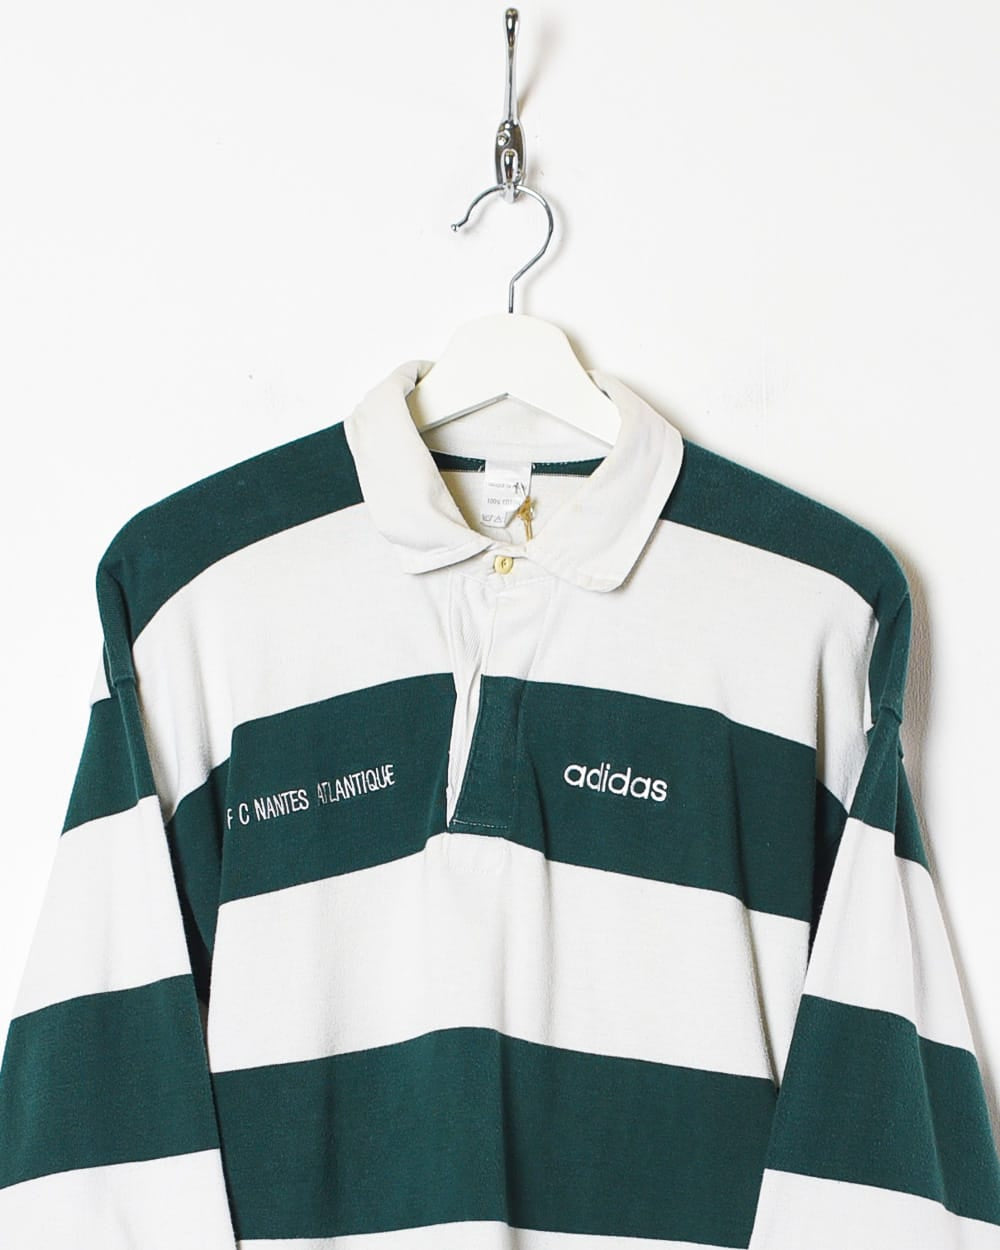 Green Adidas FC Nantes Atlantique Rugby Shirt - Small